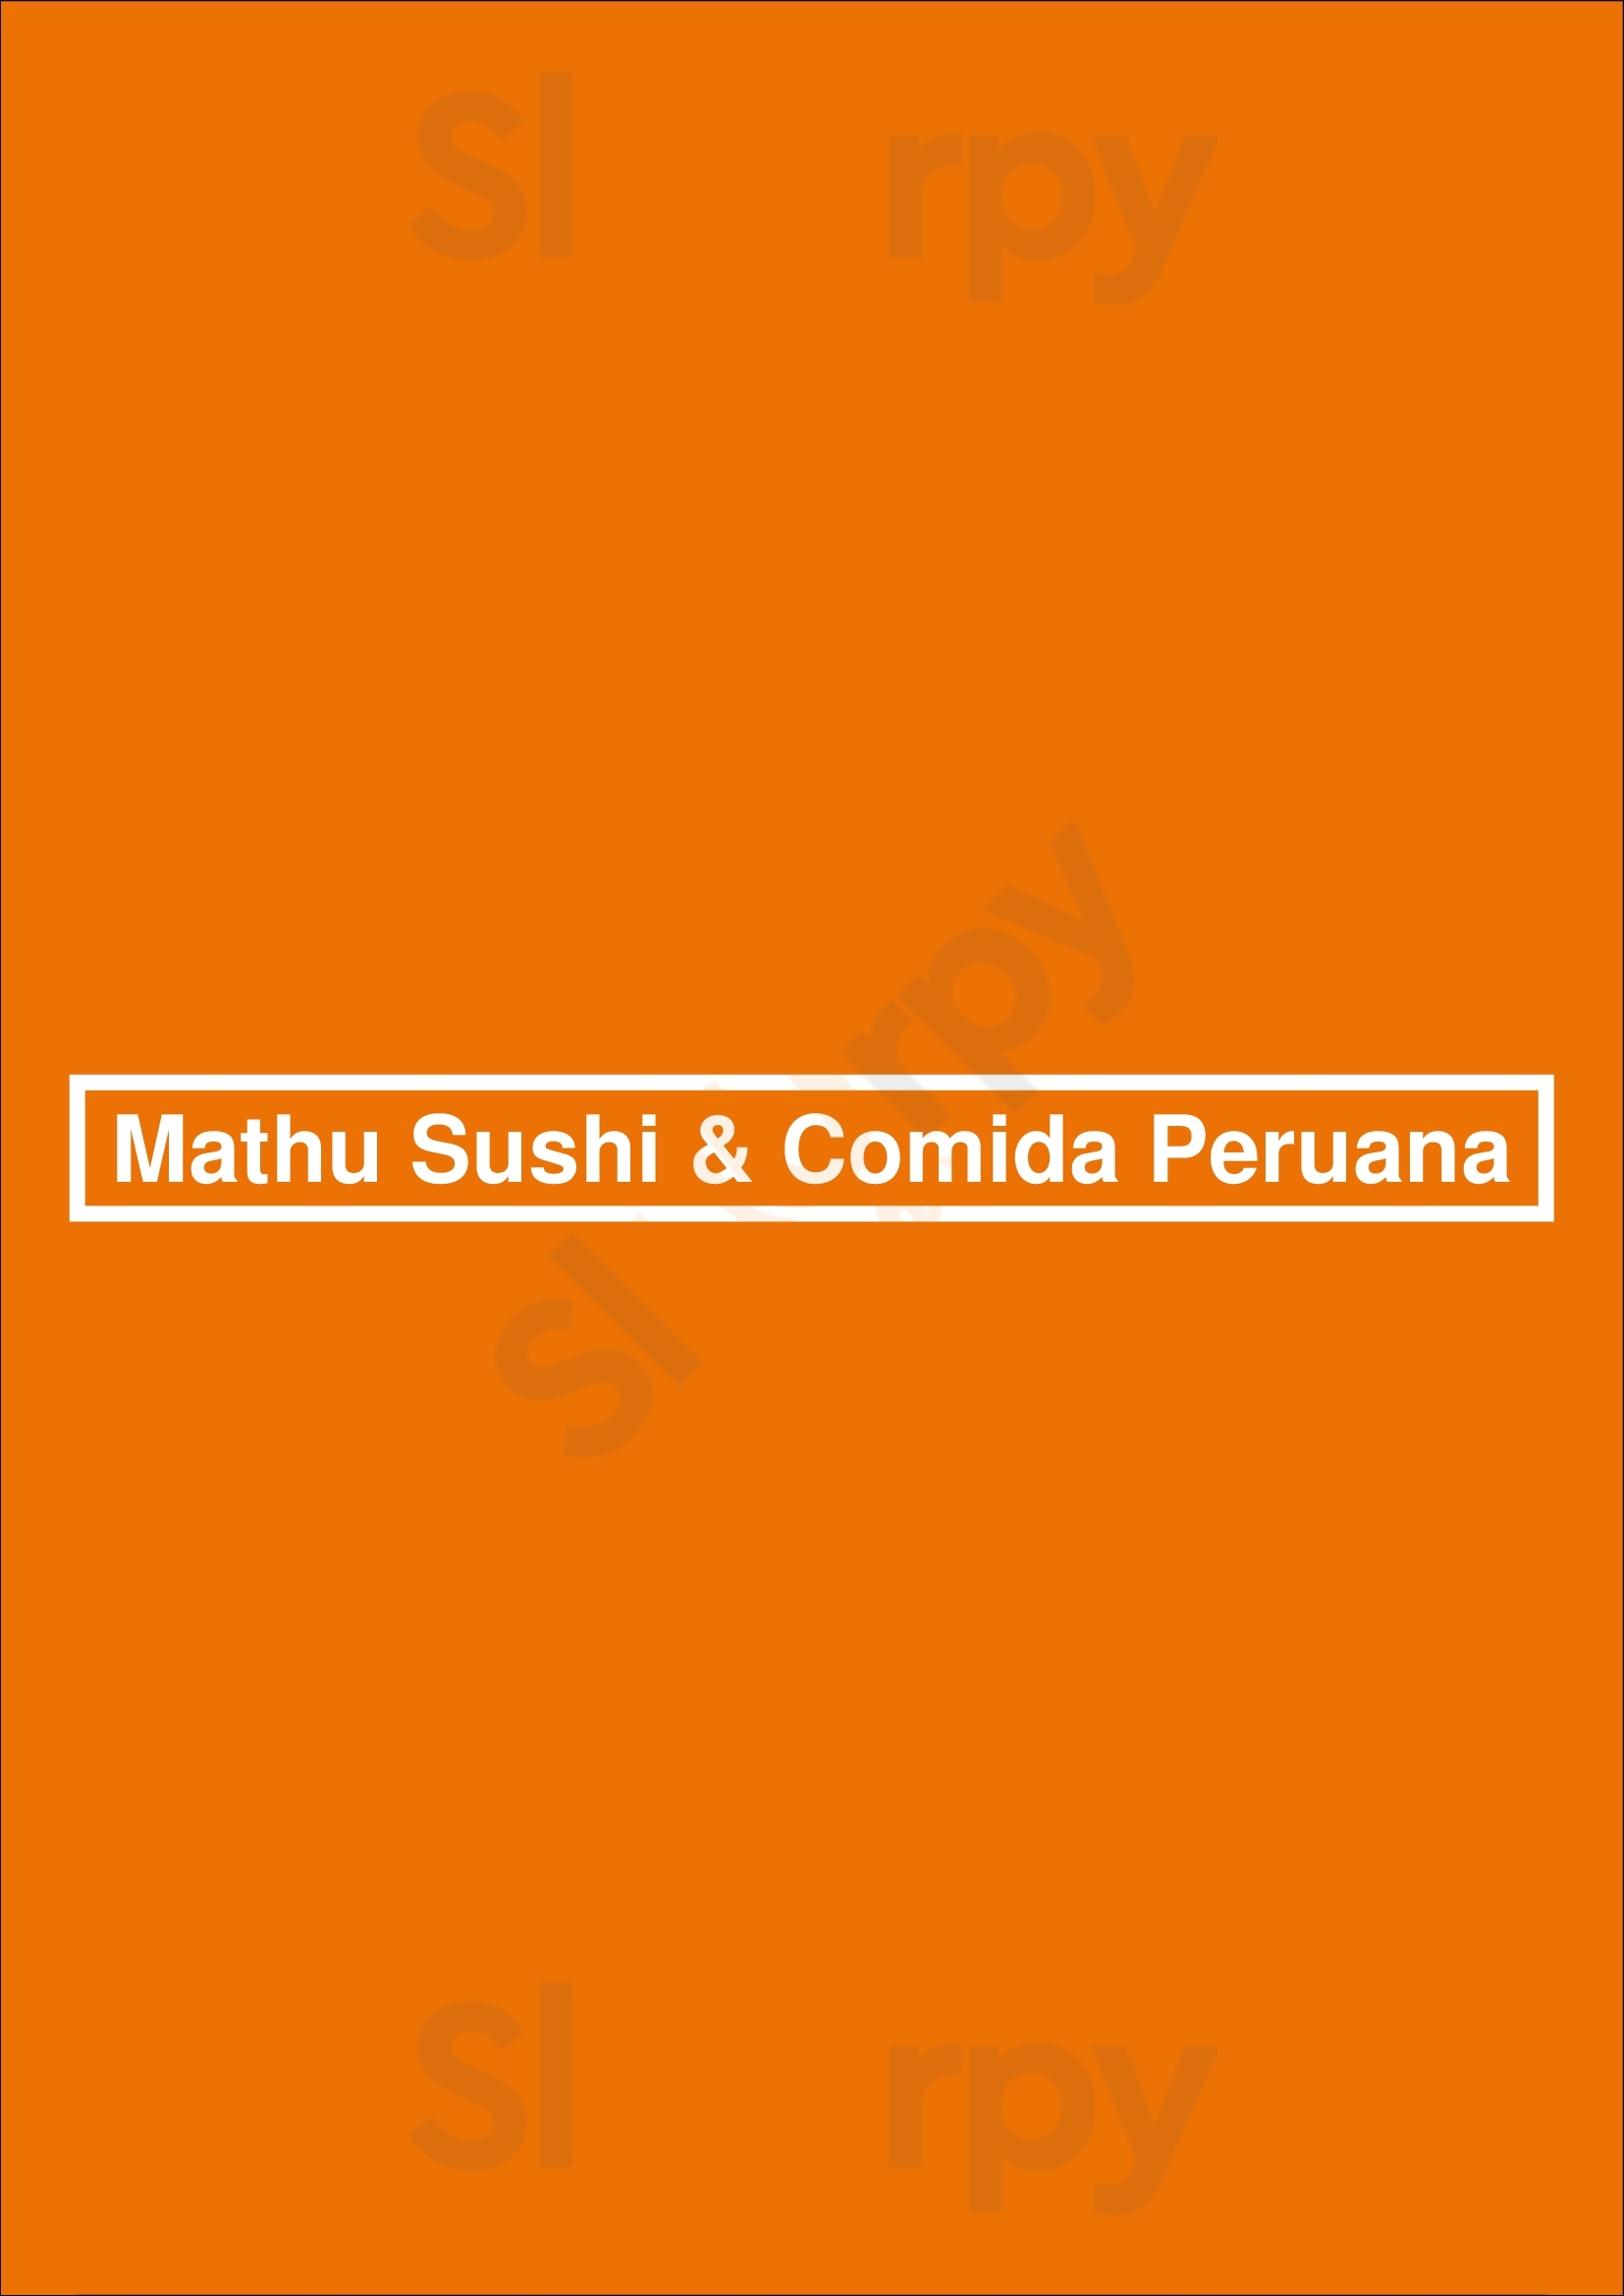 Mathu Sushi & Comida Peruana Pilar Menu - 1